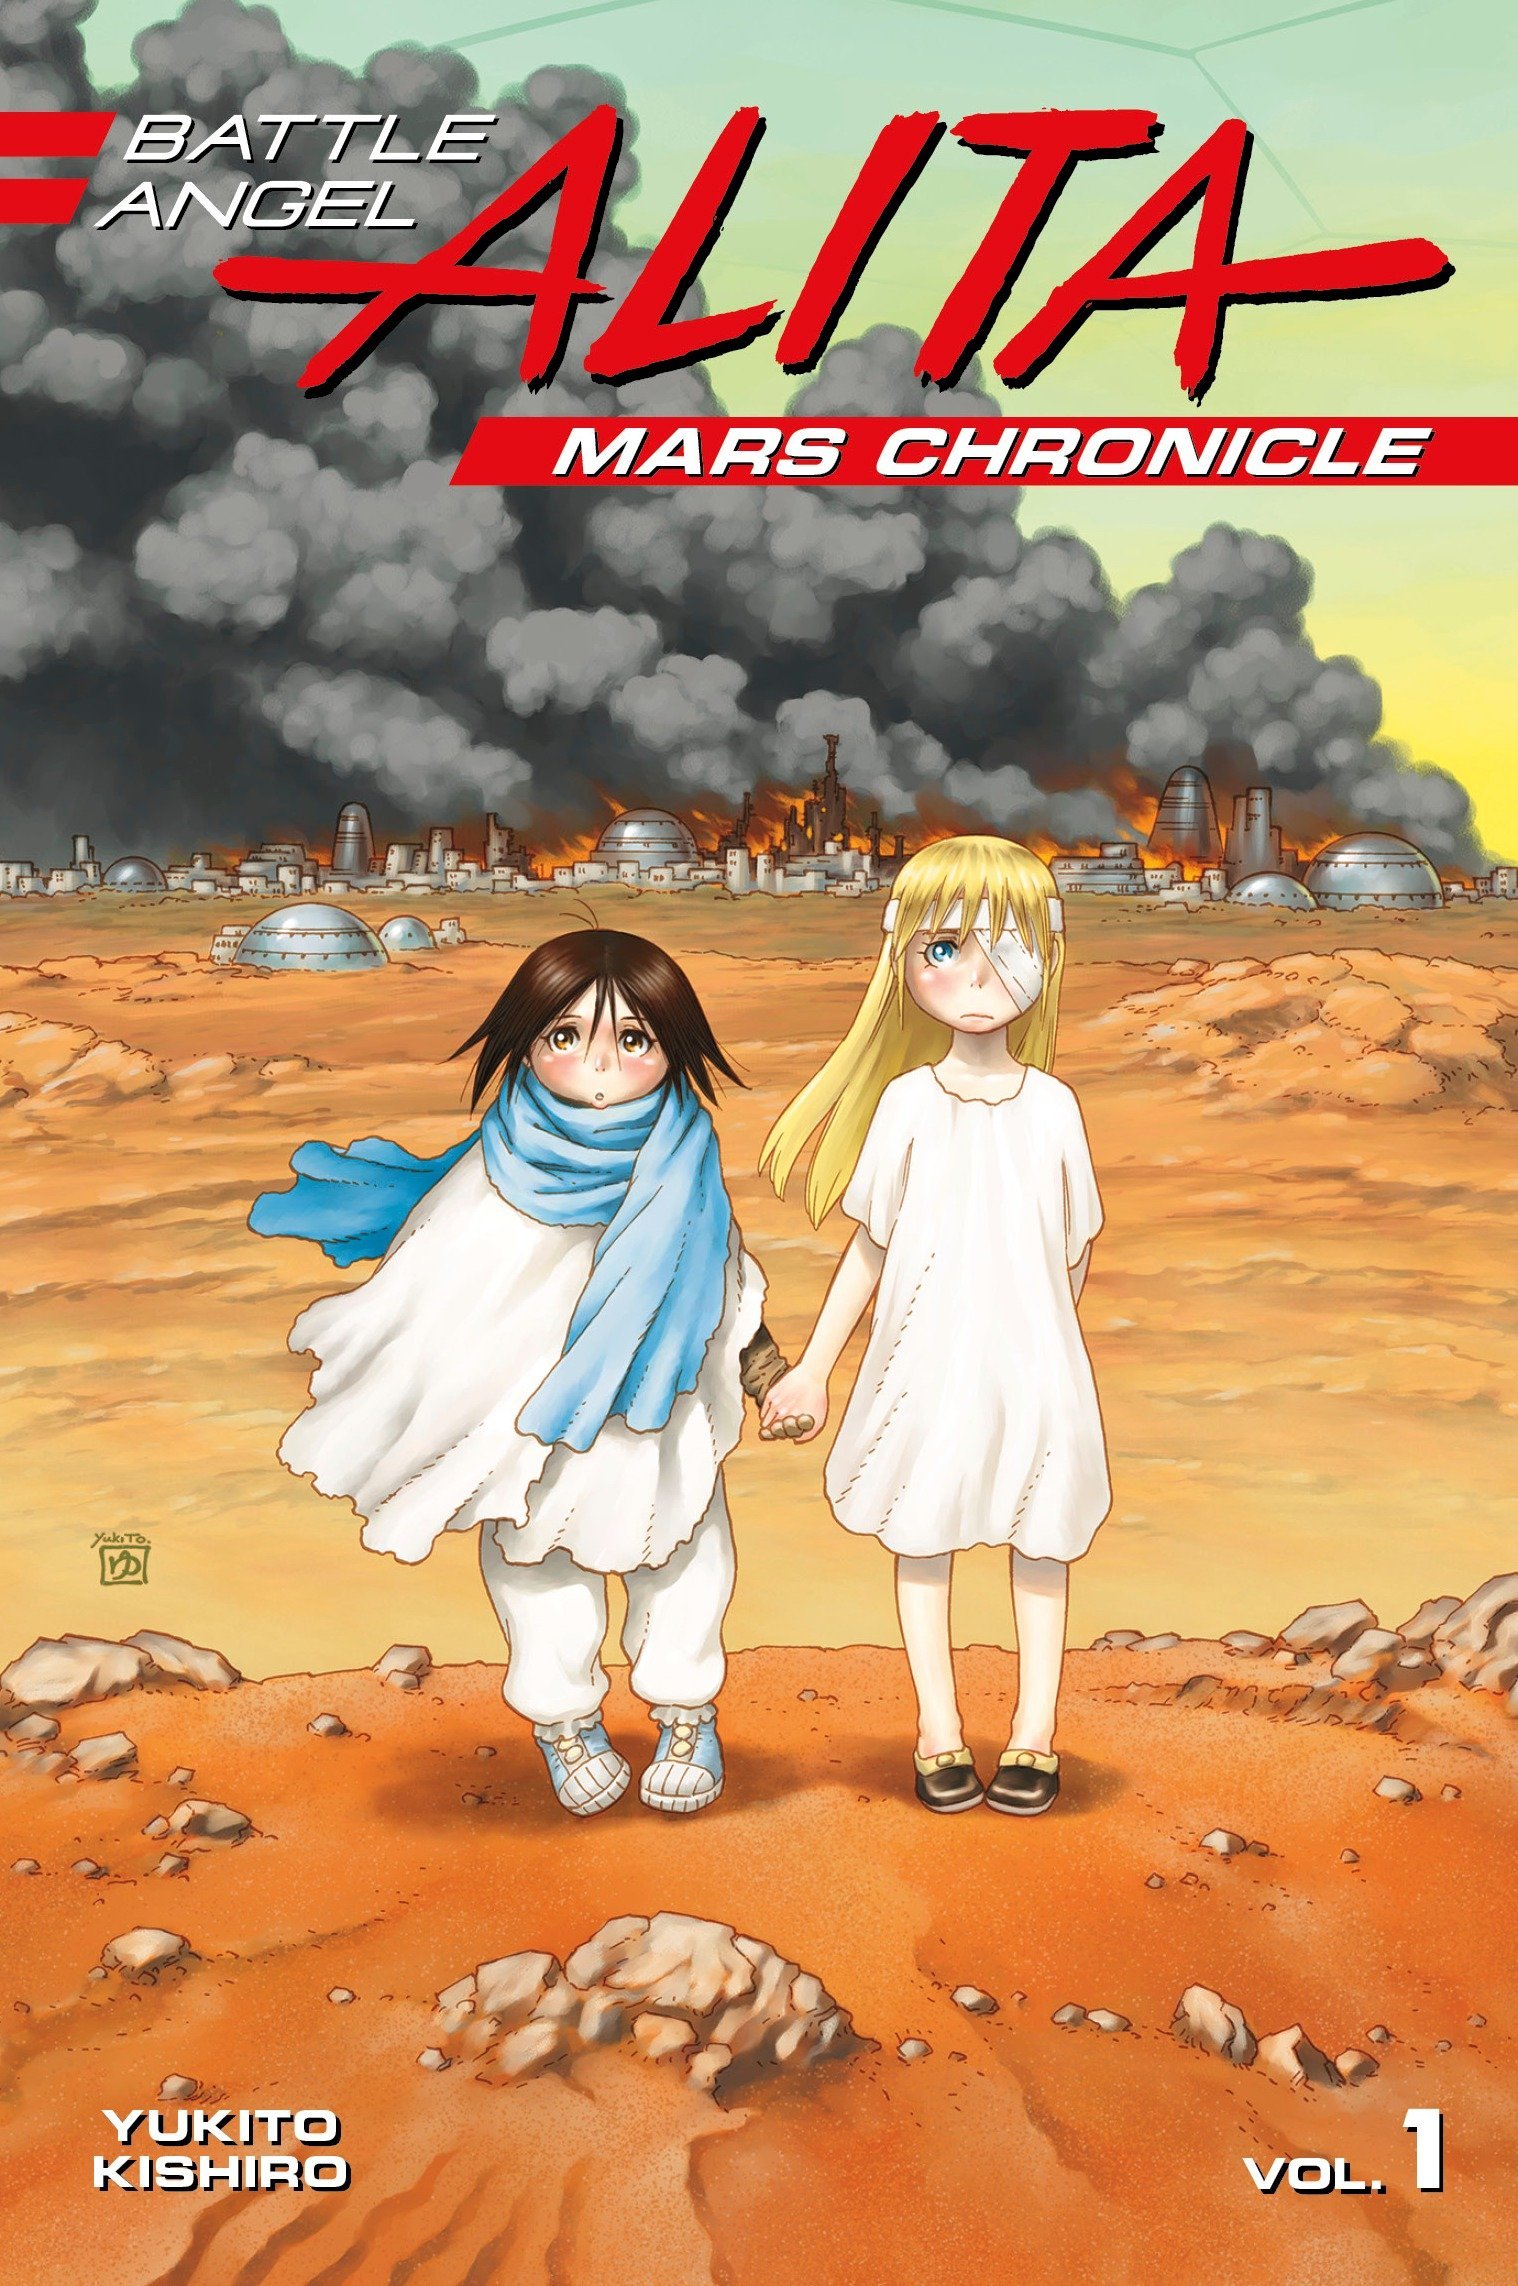 Battle Angel Alita Mars Chronicle Manga Volume 1